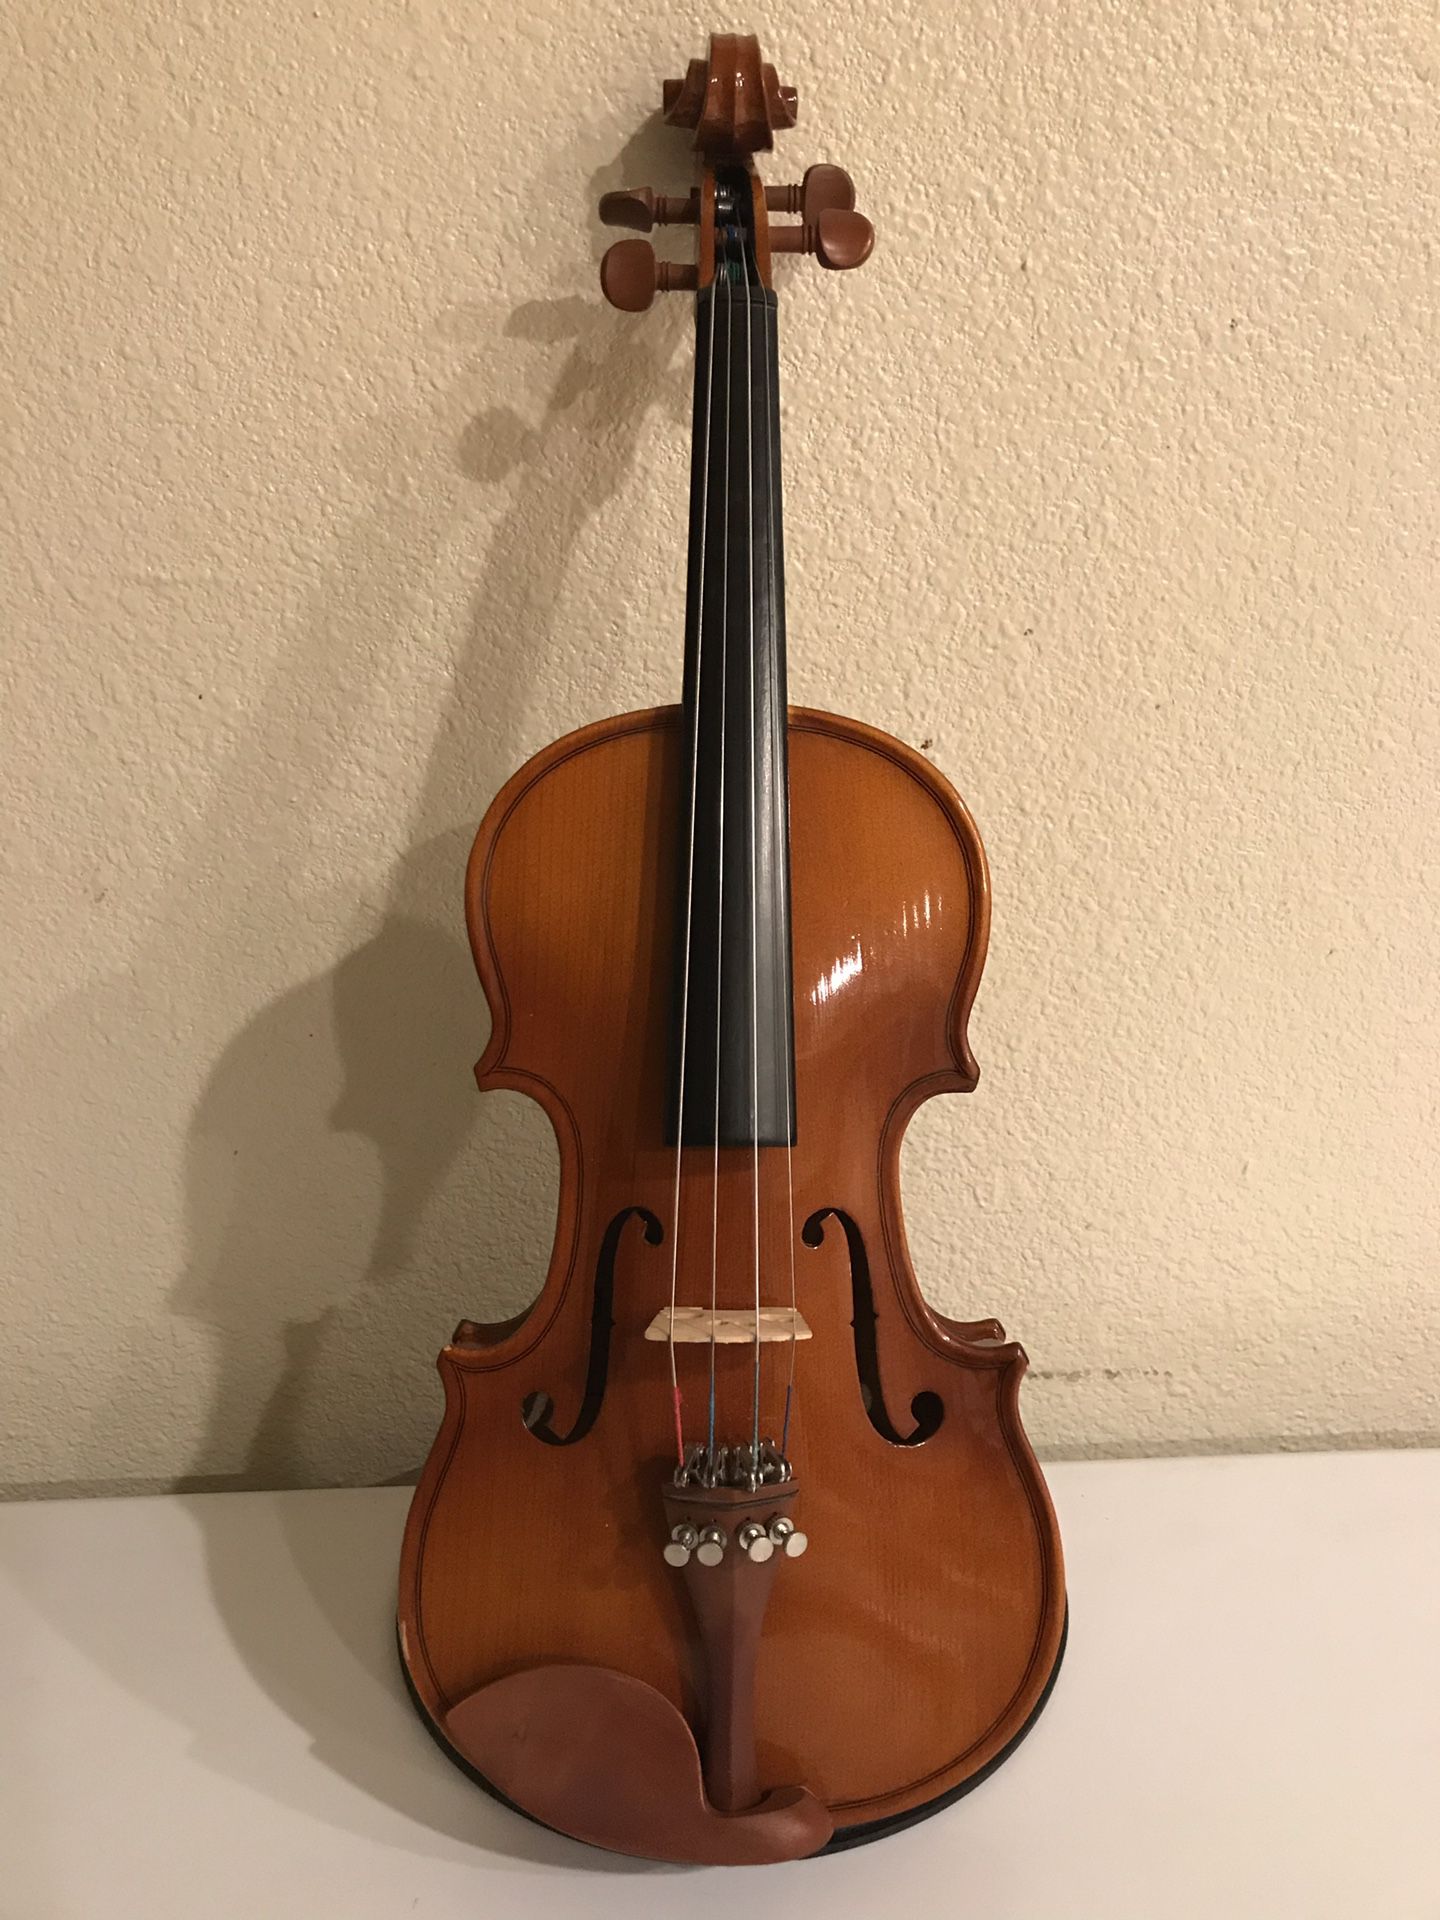 1/4 size violin